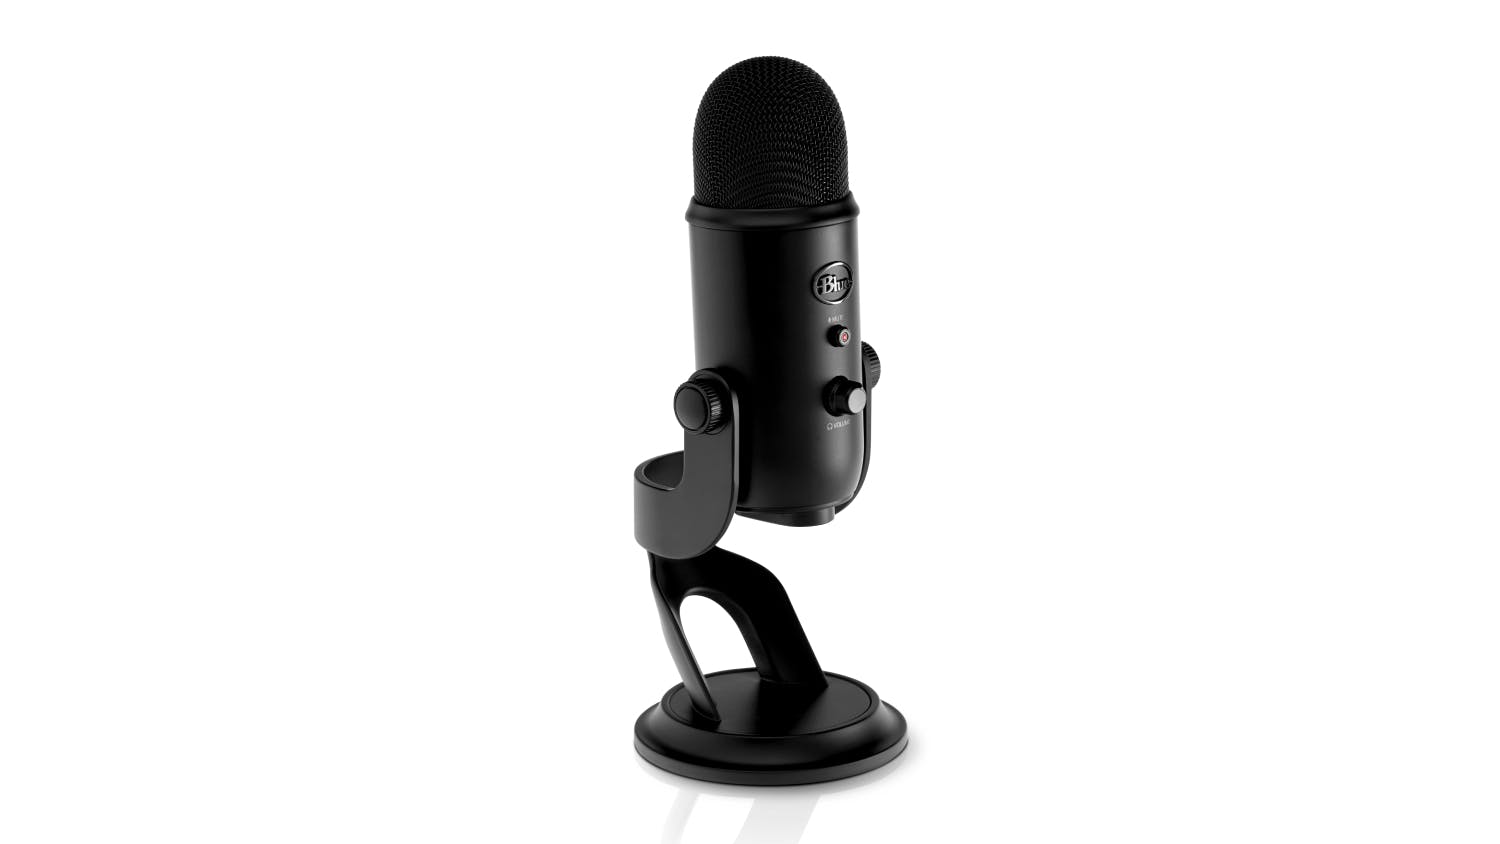 Blue Yeti 3-Capsule USB Microphone - Black